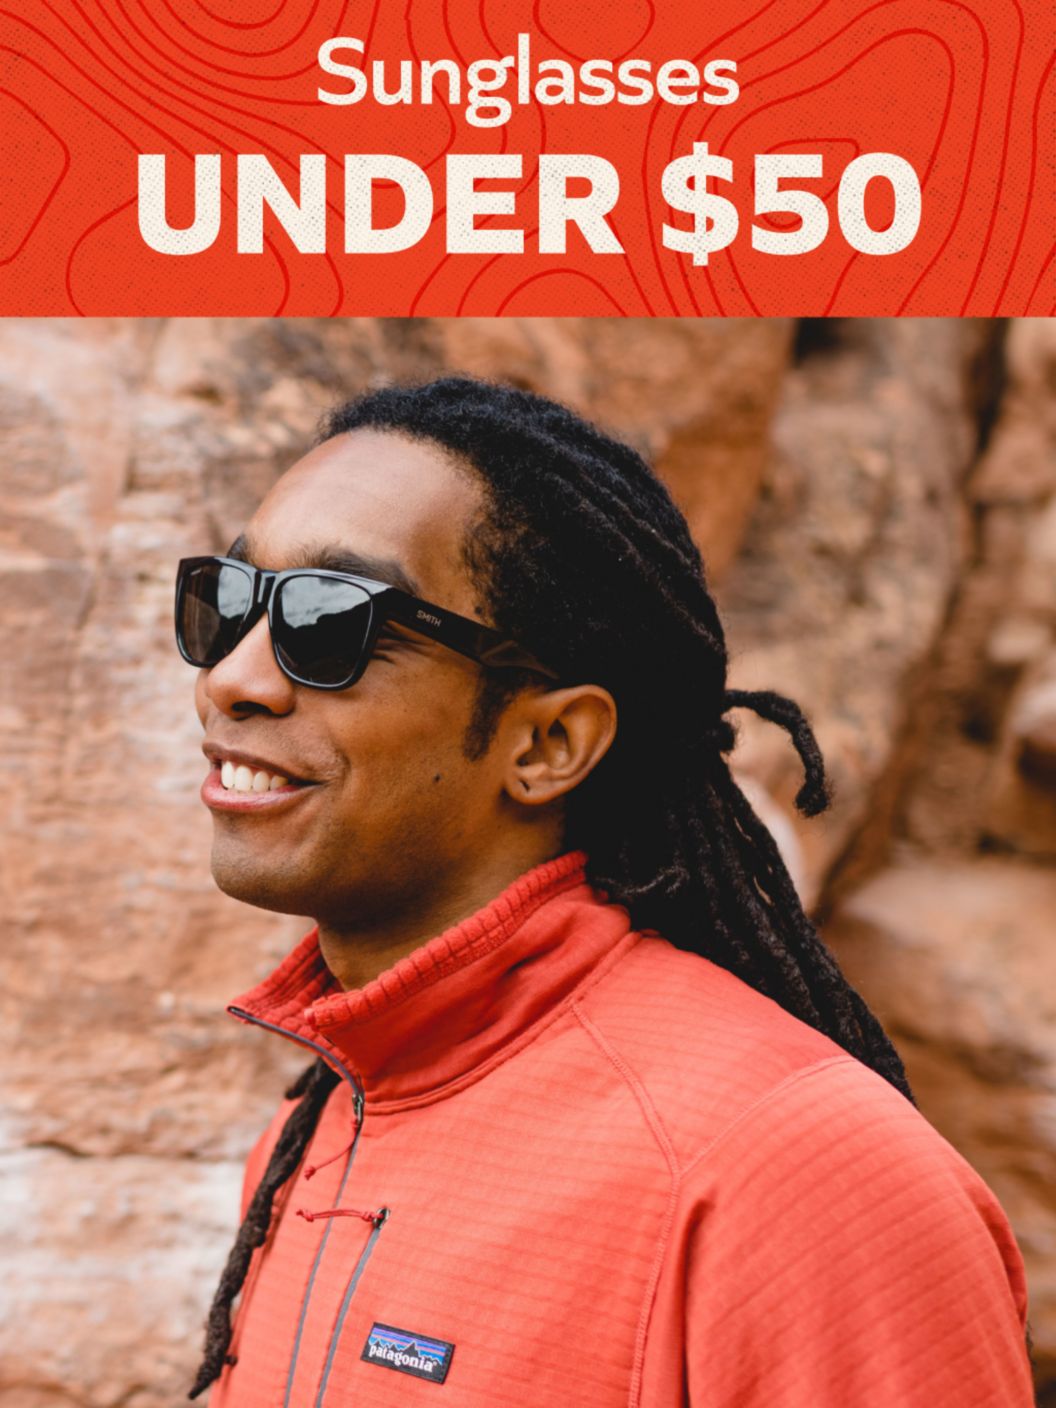 Sunglasses Under $50